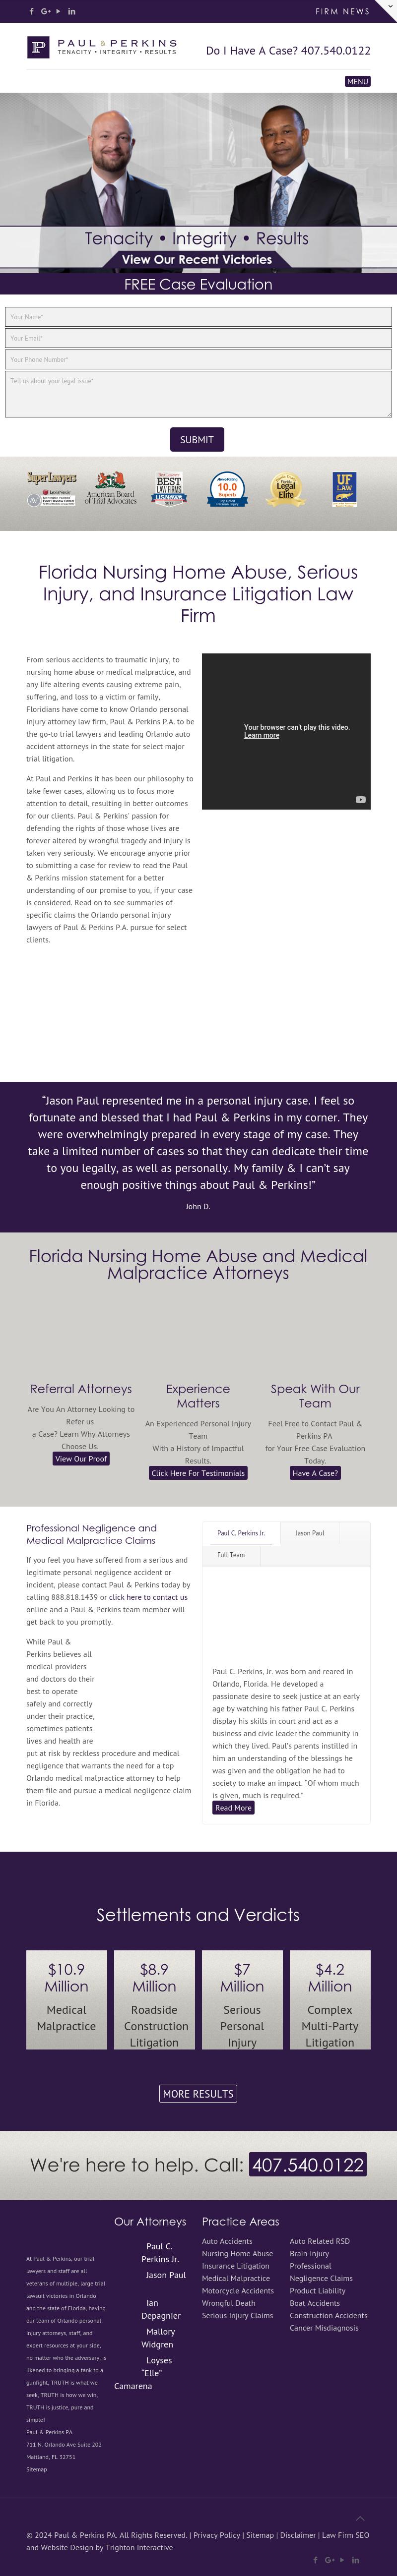 Paul & Perkins P.A. - Orlando FL Lawyers